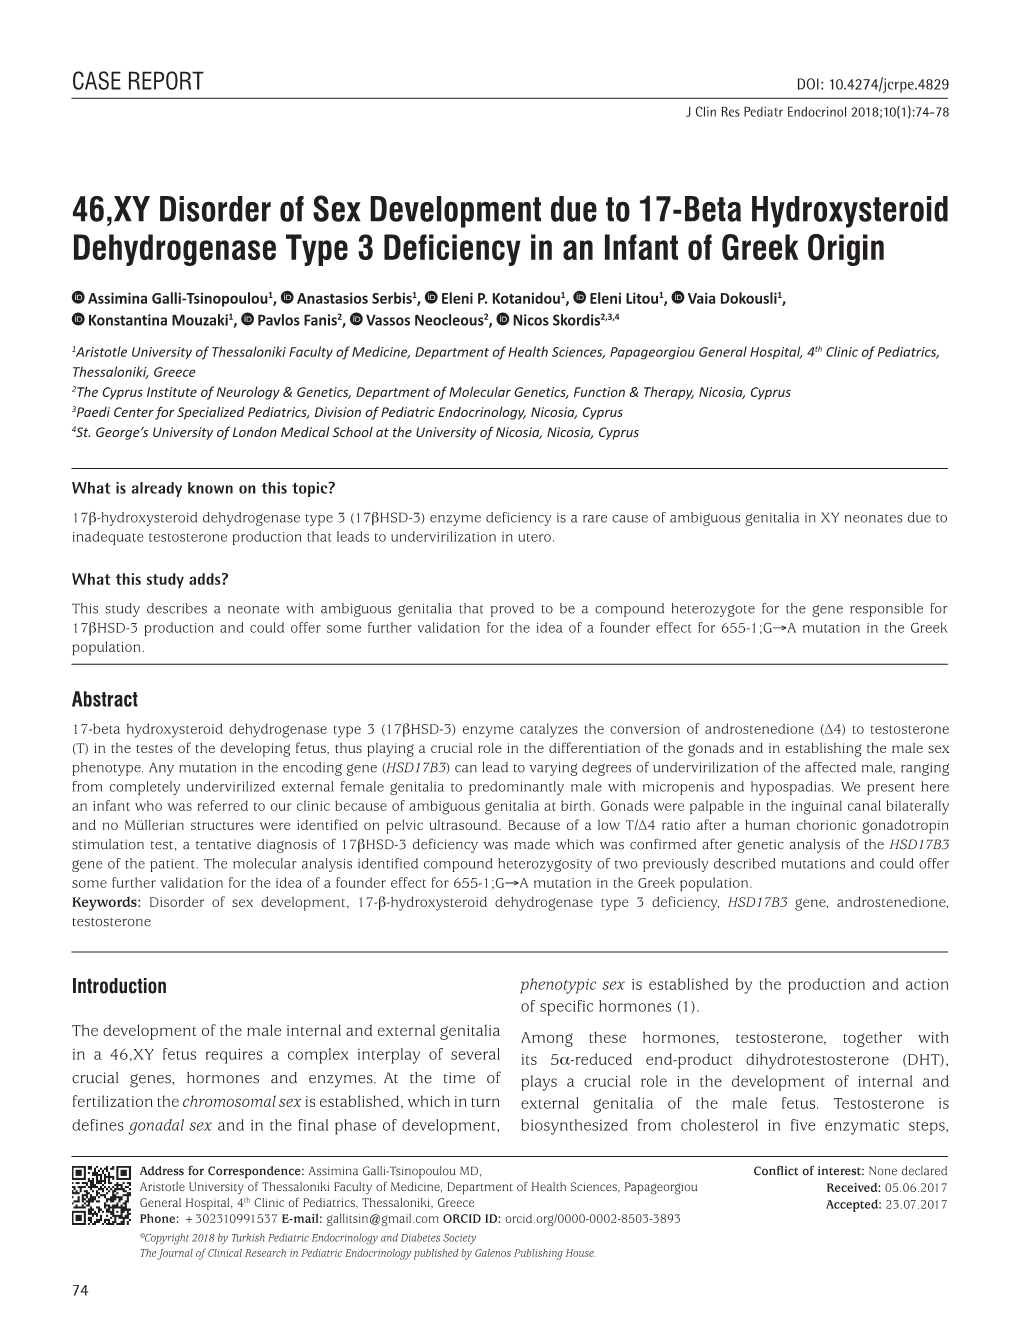 46,XY Disorder of Sex Development Due to 17-Beta Hydroxysteroid Dehydrogenase Type 3 Deficiency in an Infant of Greek Origin